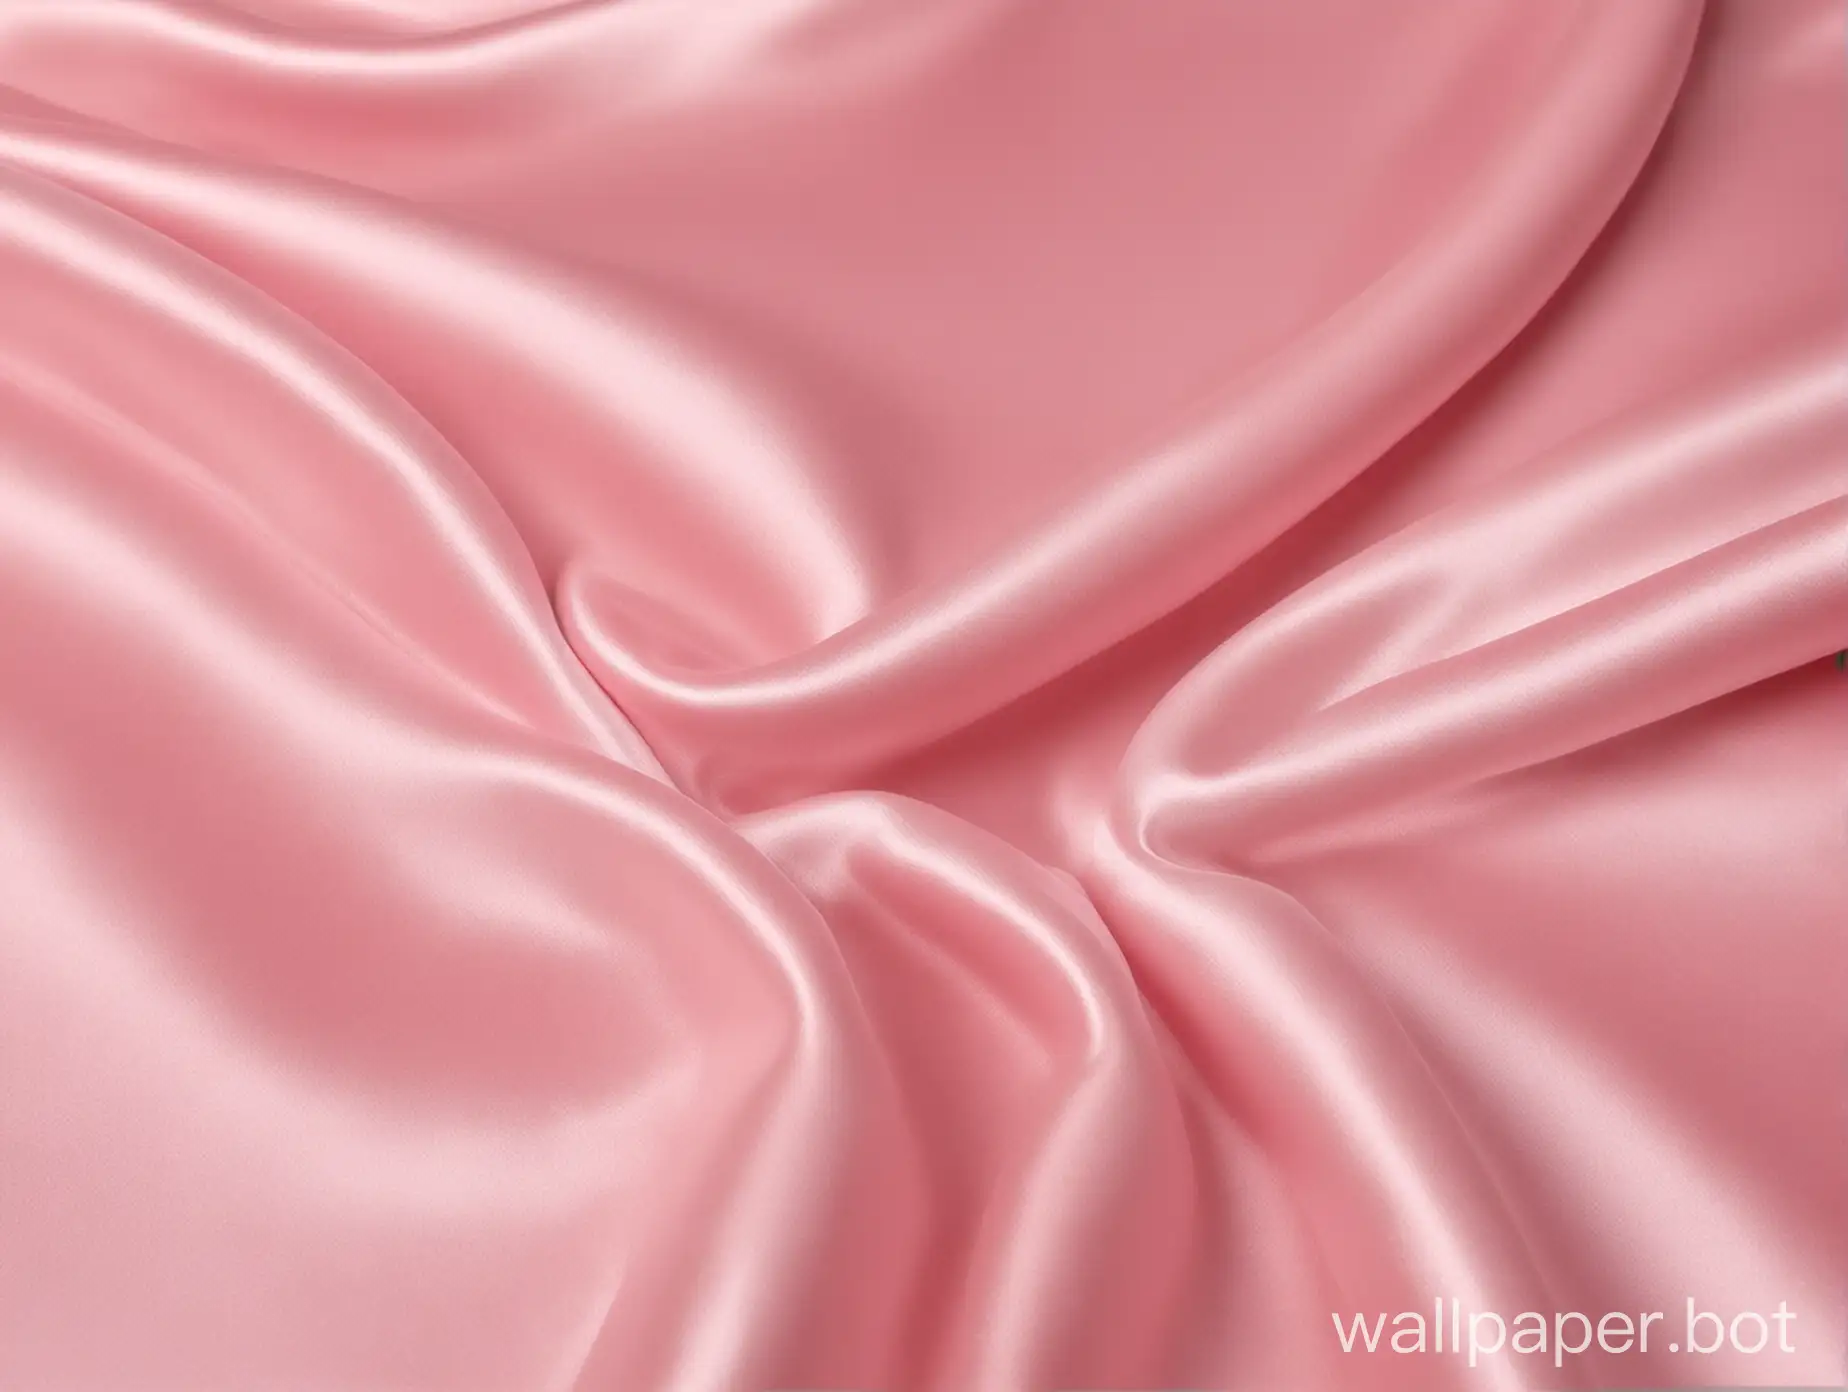 gentle pink liquid mulberry silk bed fetish